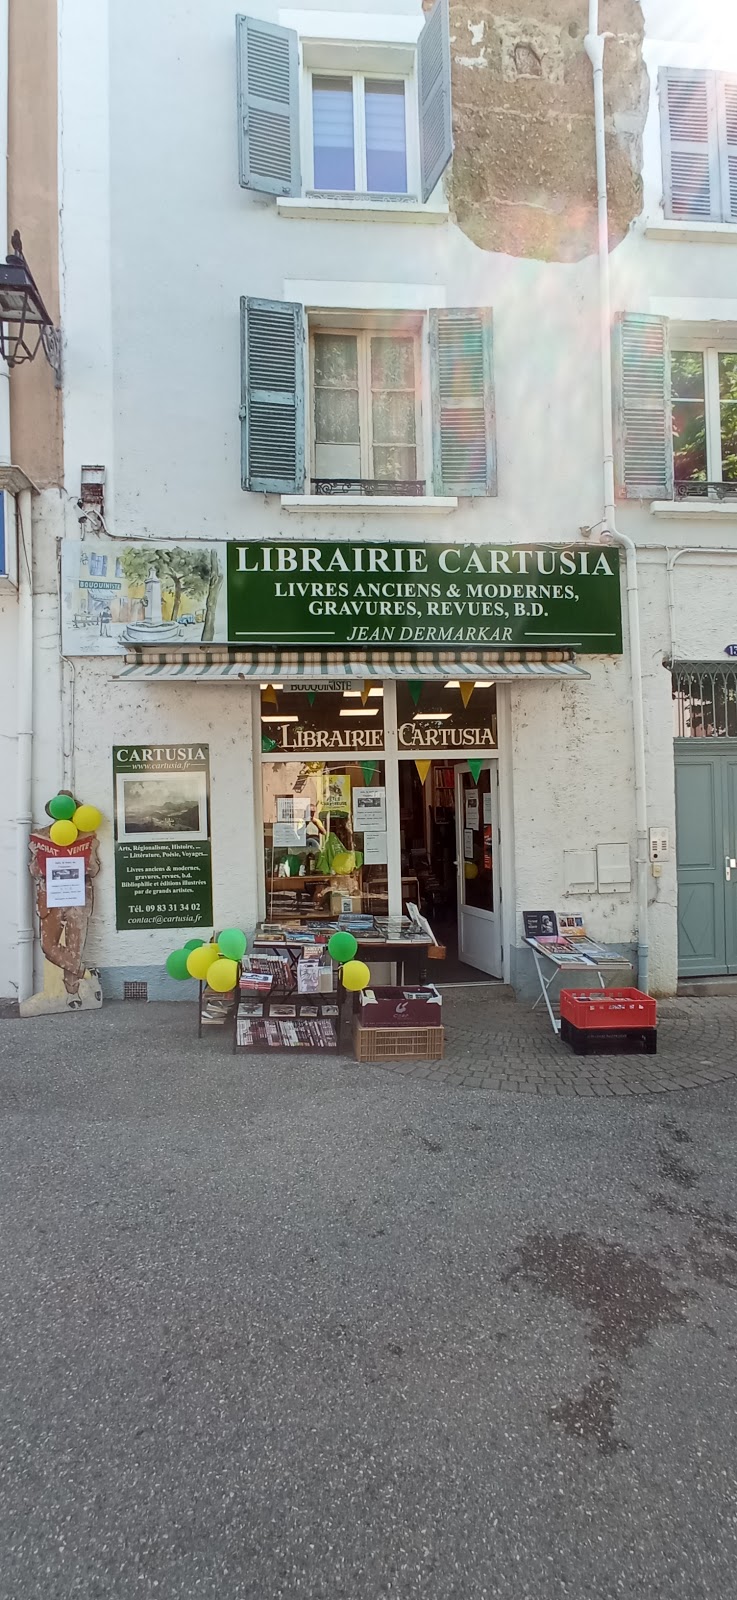 " librairie cartusia"